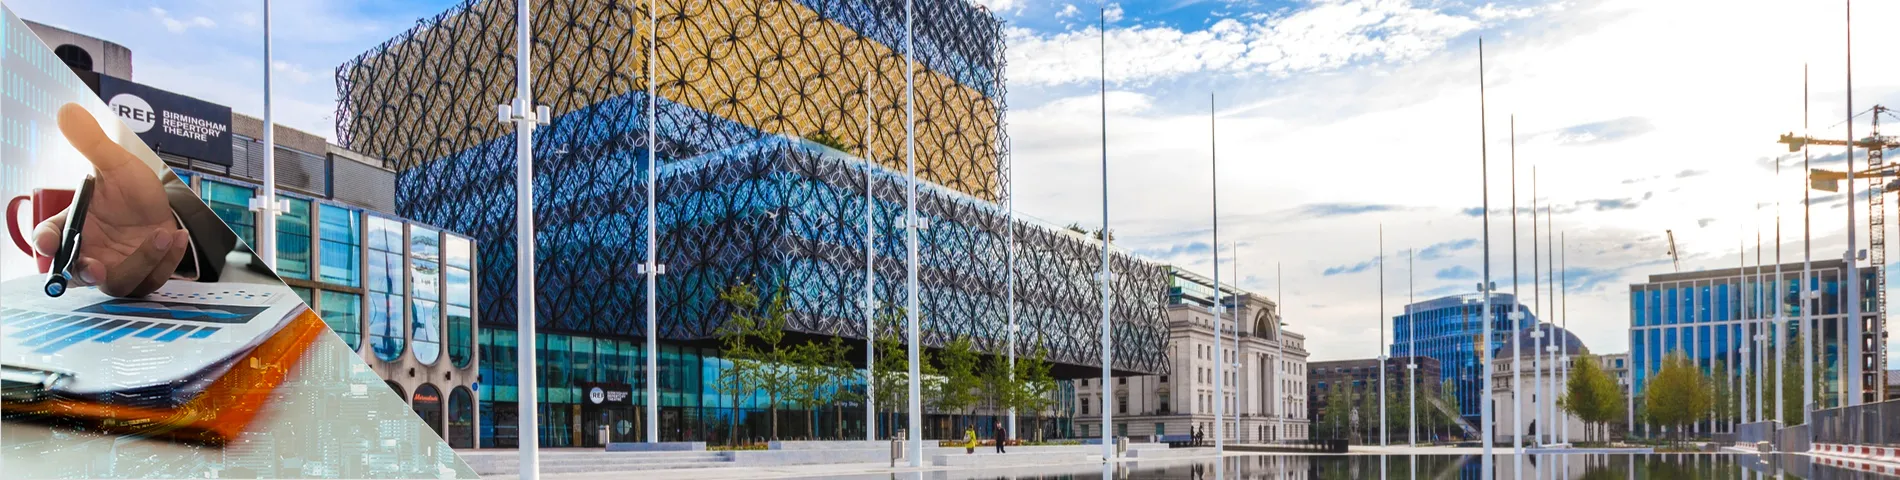 Birmingham - Bankovníctvo a financie